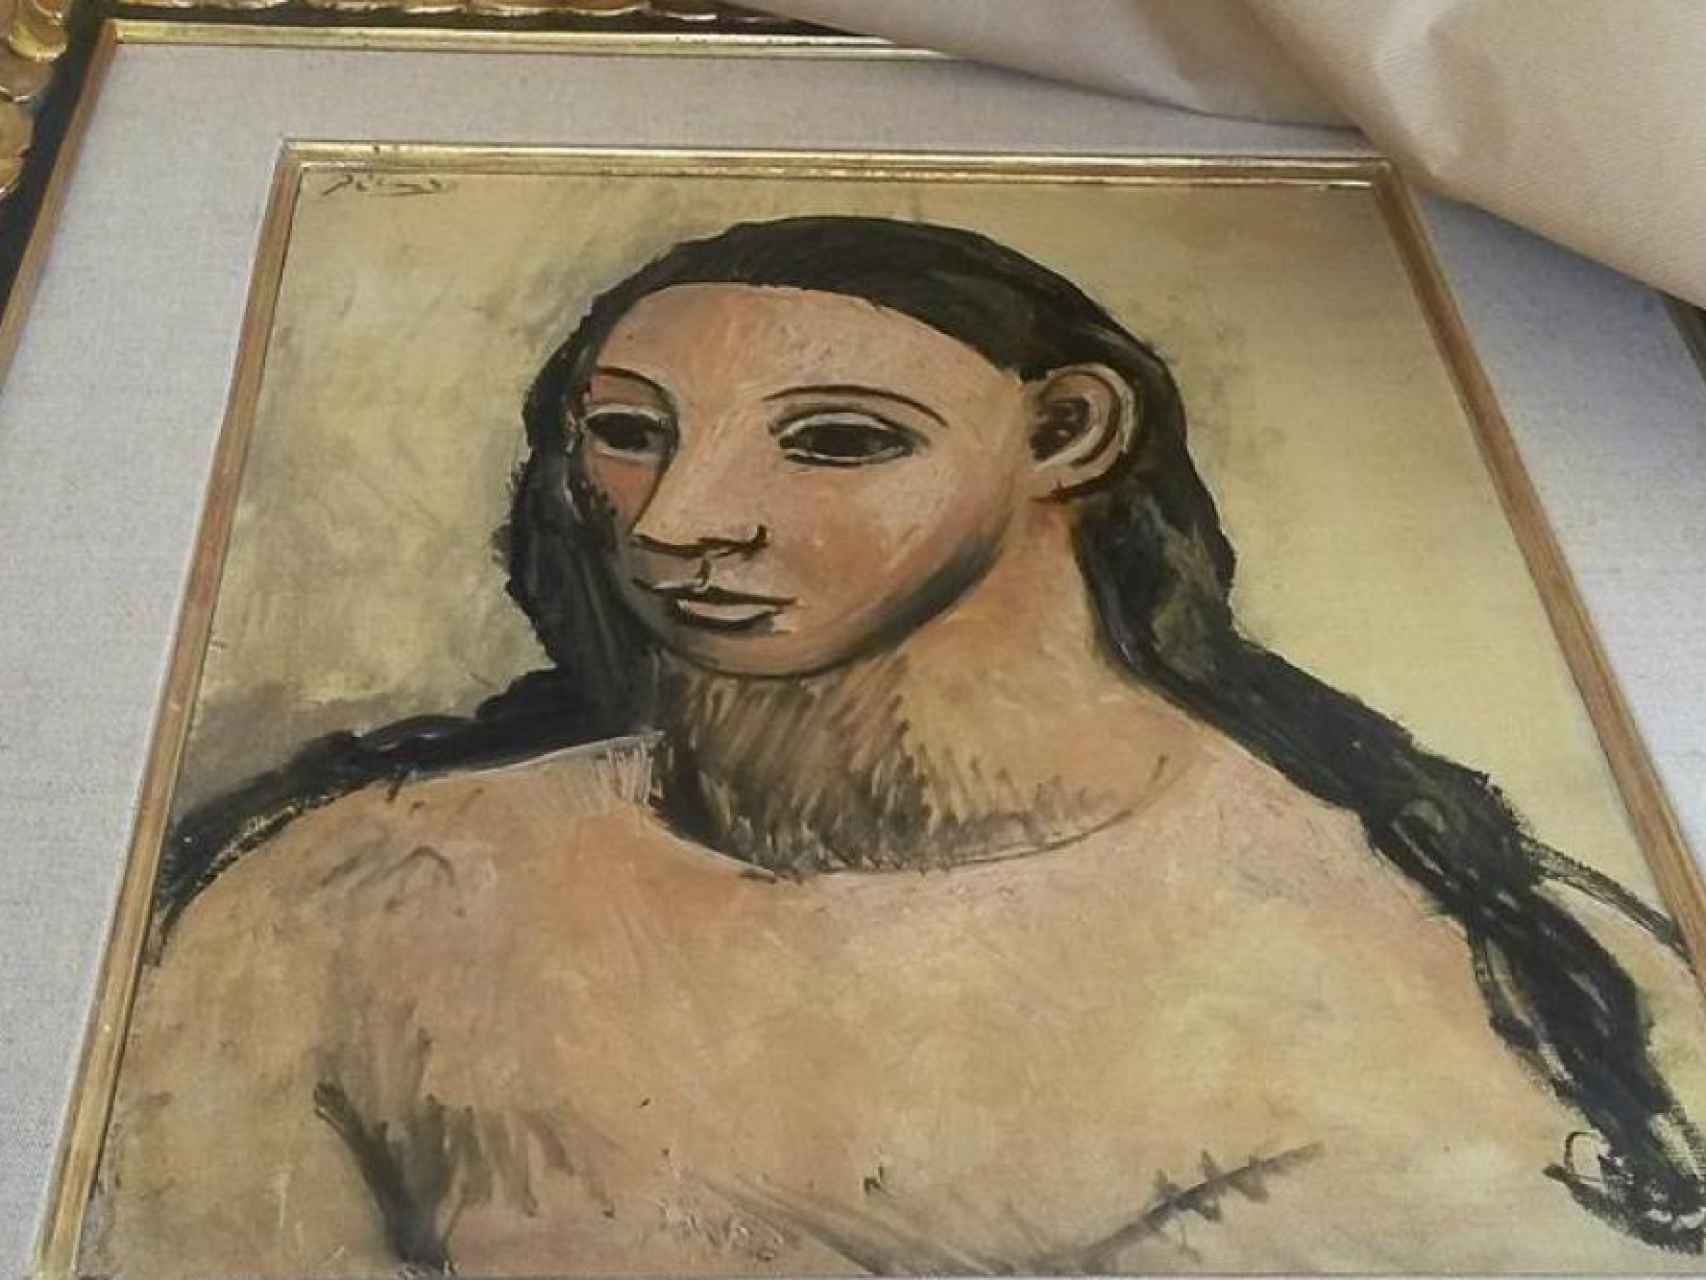 Cabeza de mujer joven, de Picasso.